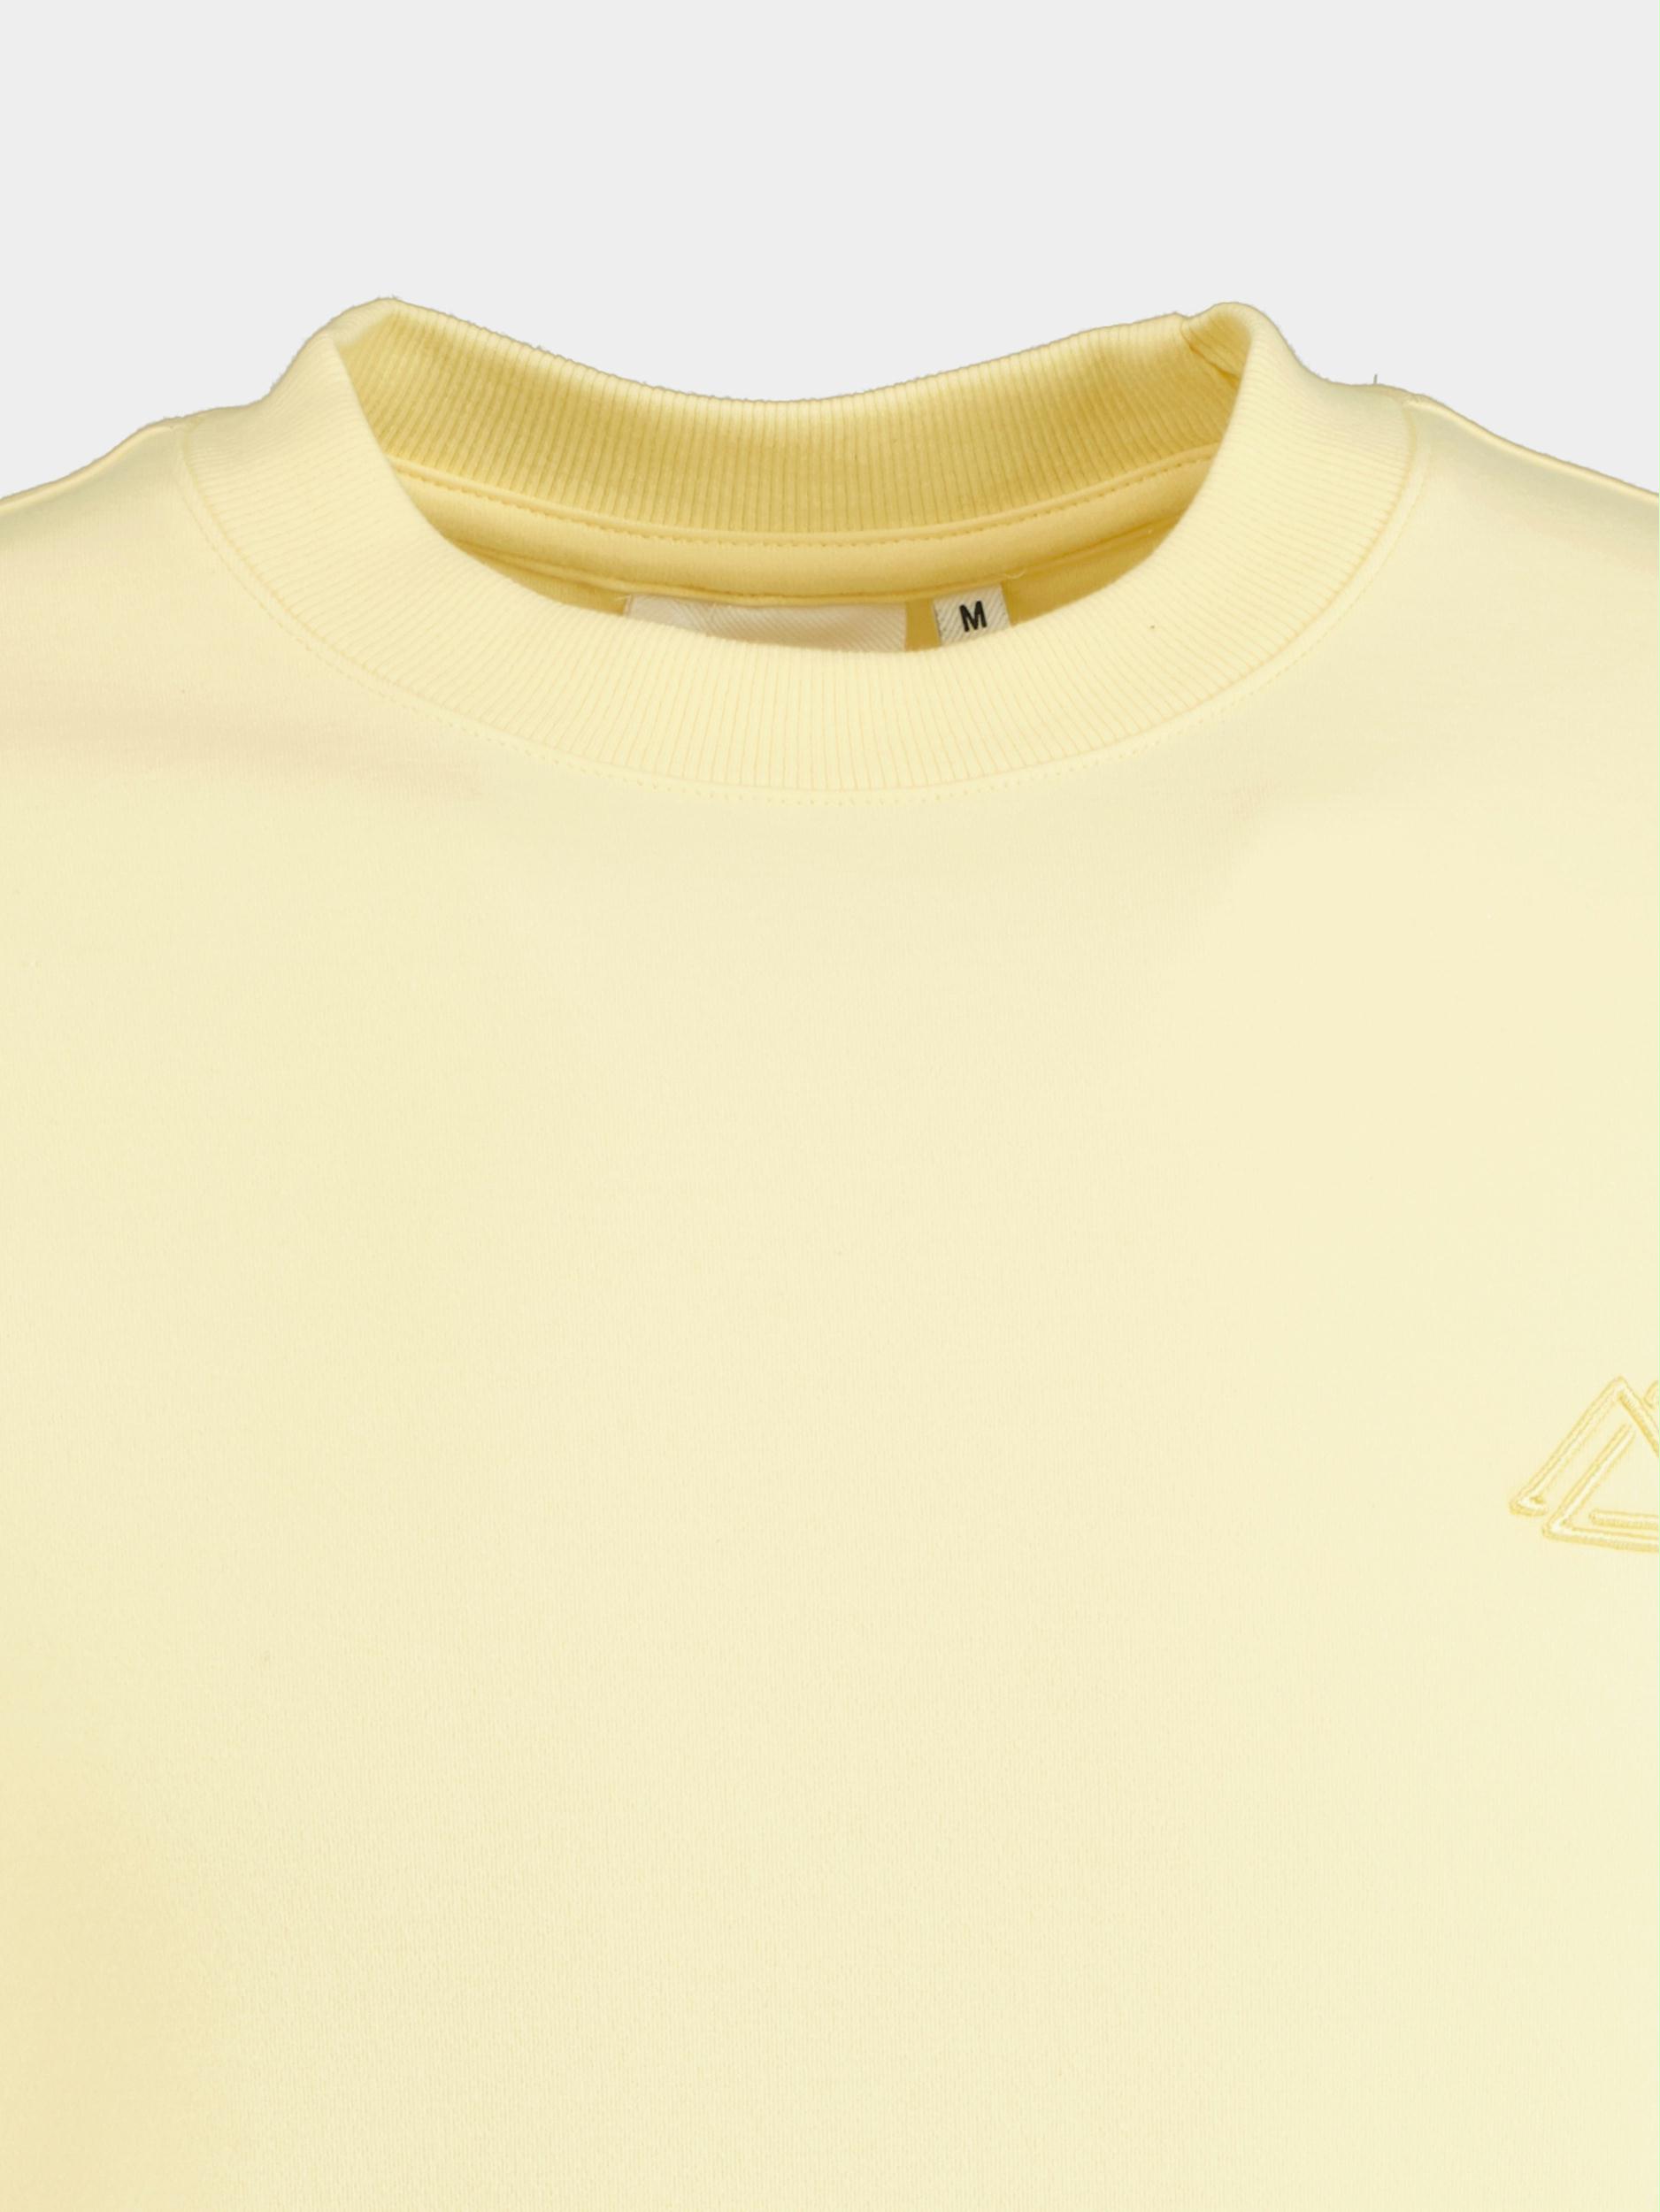 Supply & Co. T-shirt korte mouw Geel Will Sweat Short Sleeve 22112WI05/410 soft yellow